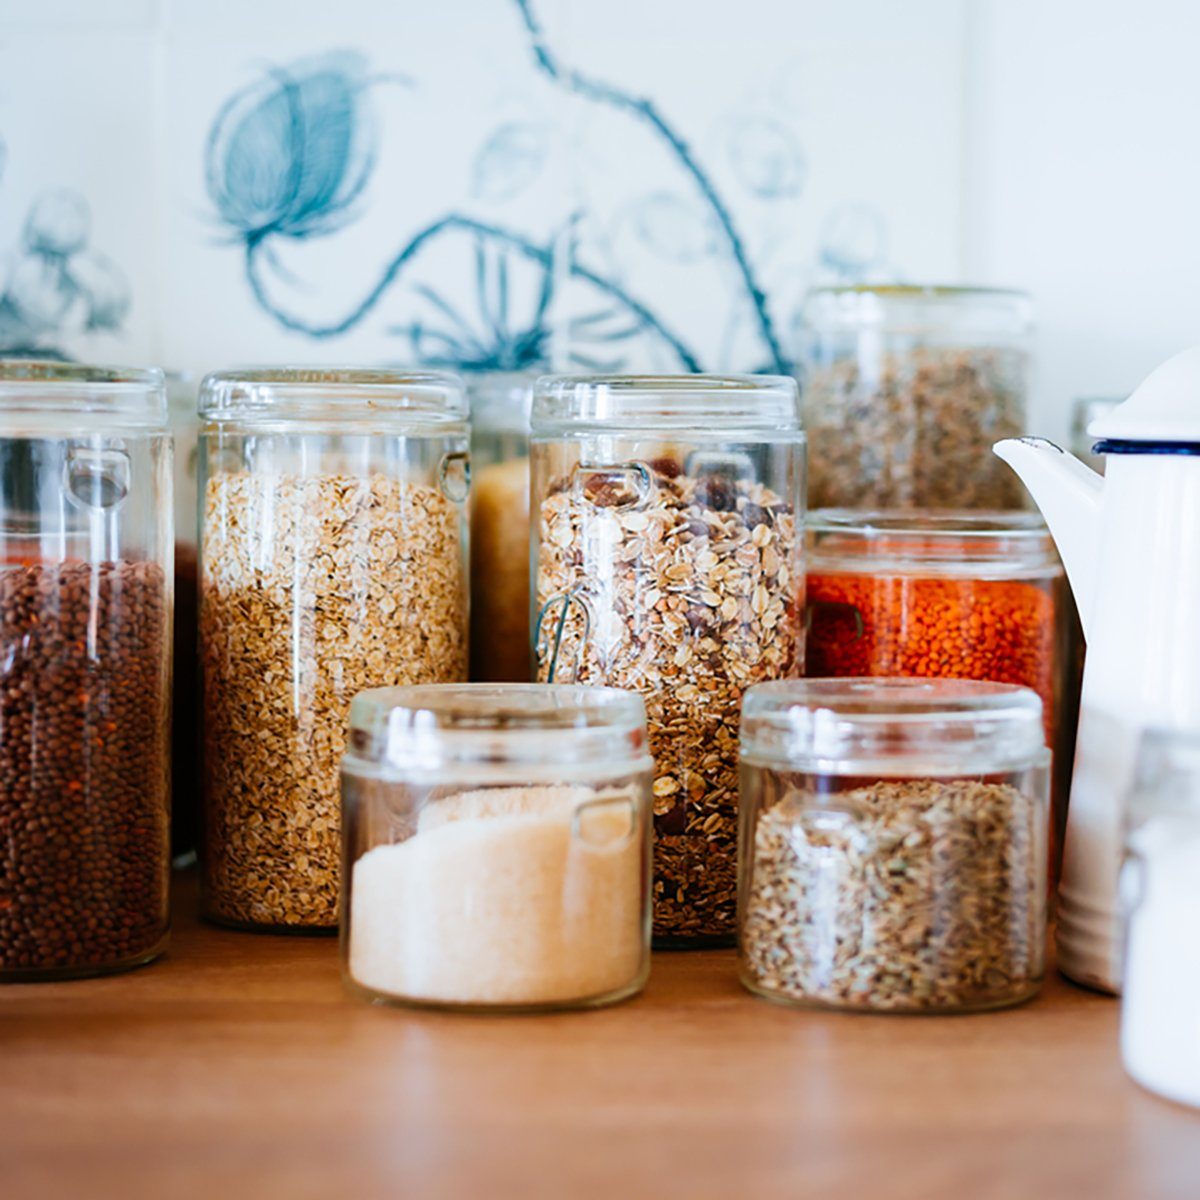 Jar of cereals in kitchen cupboard